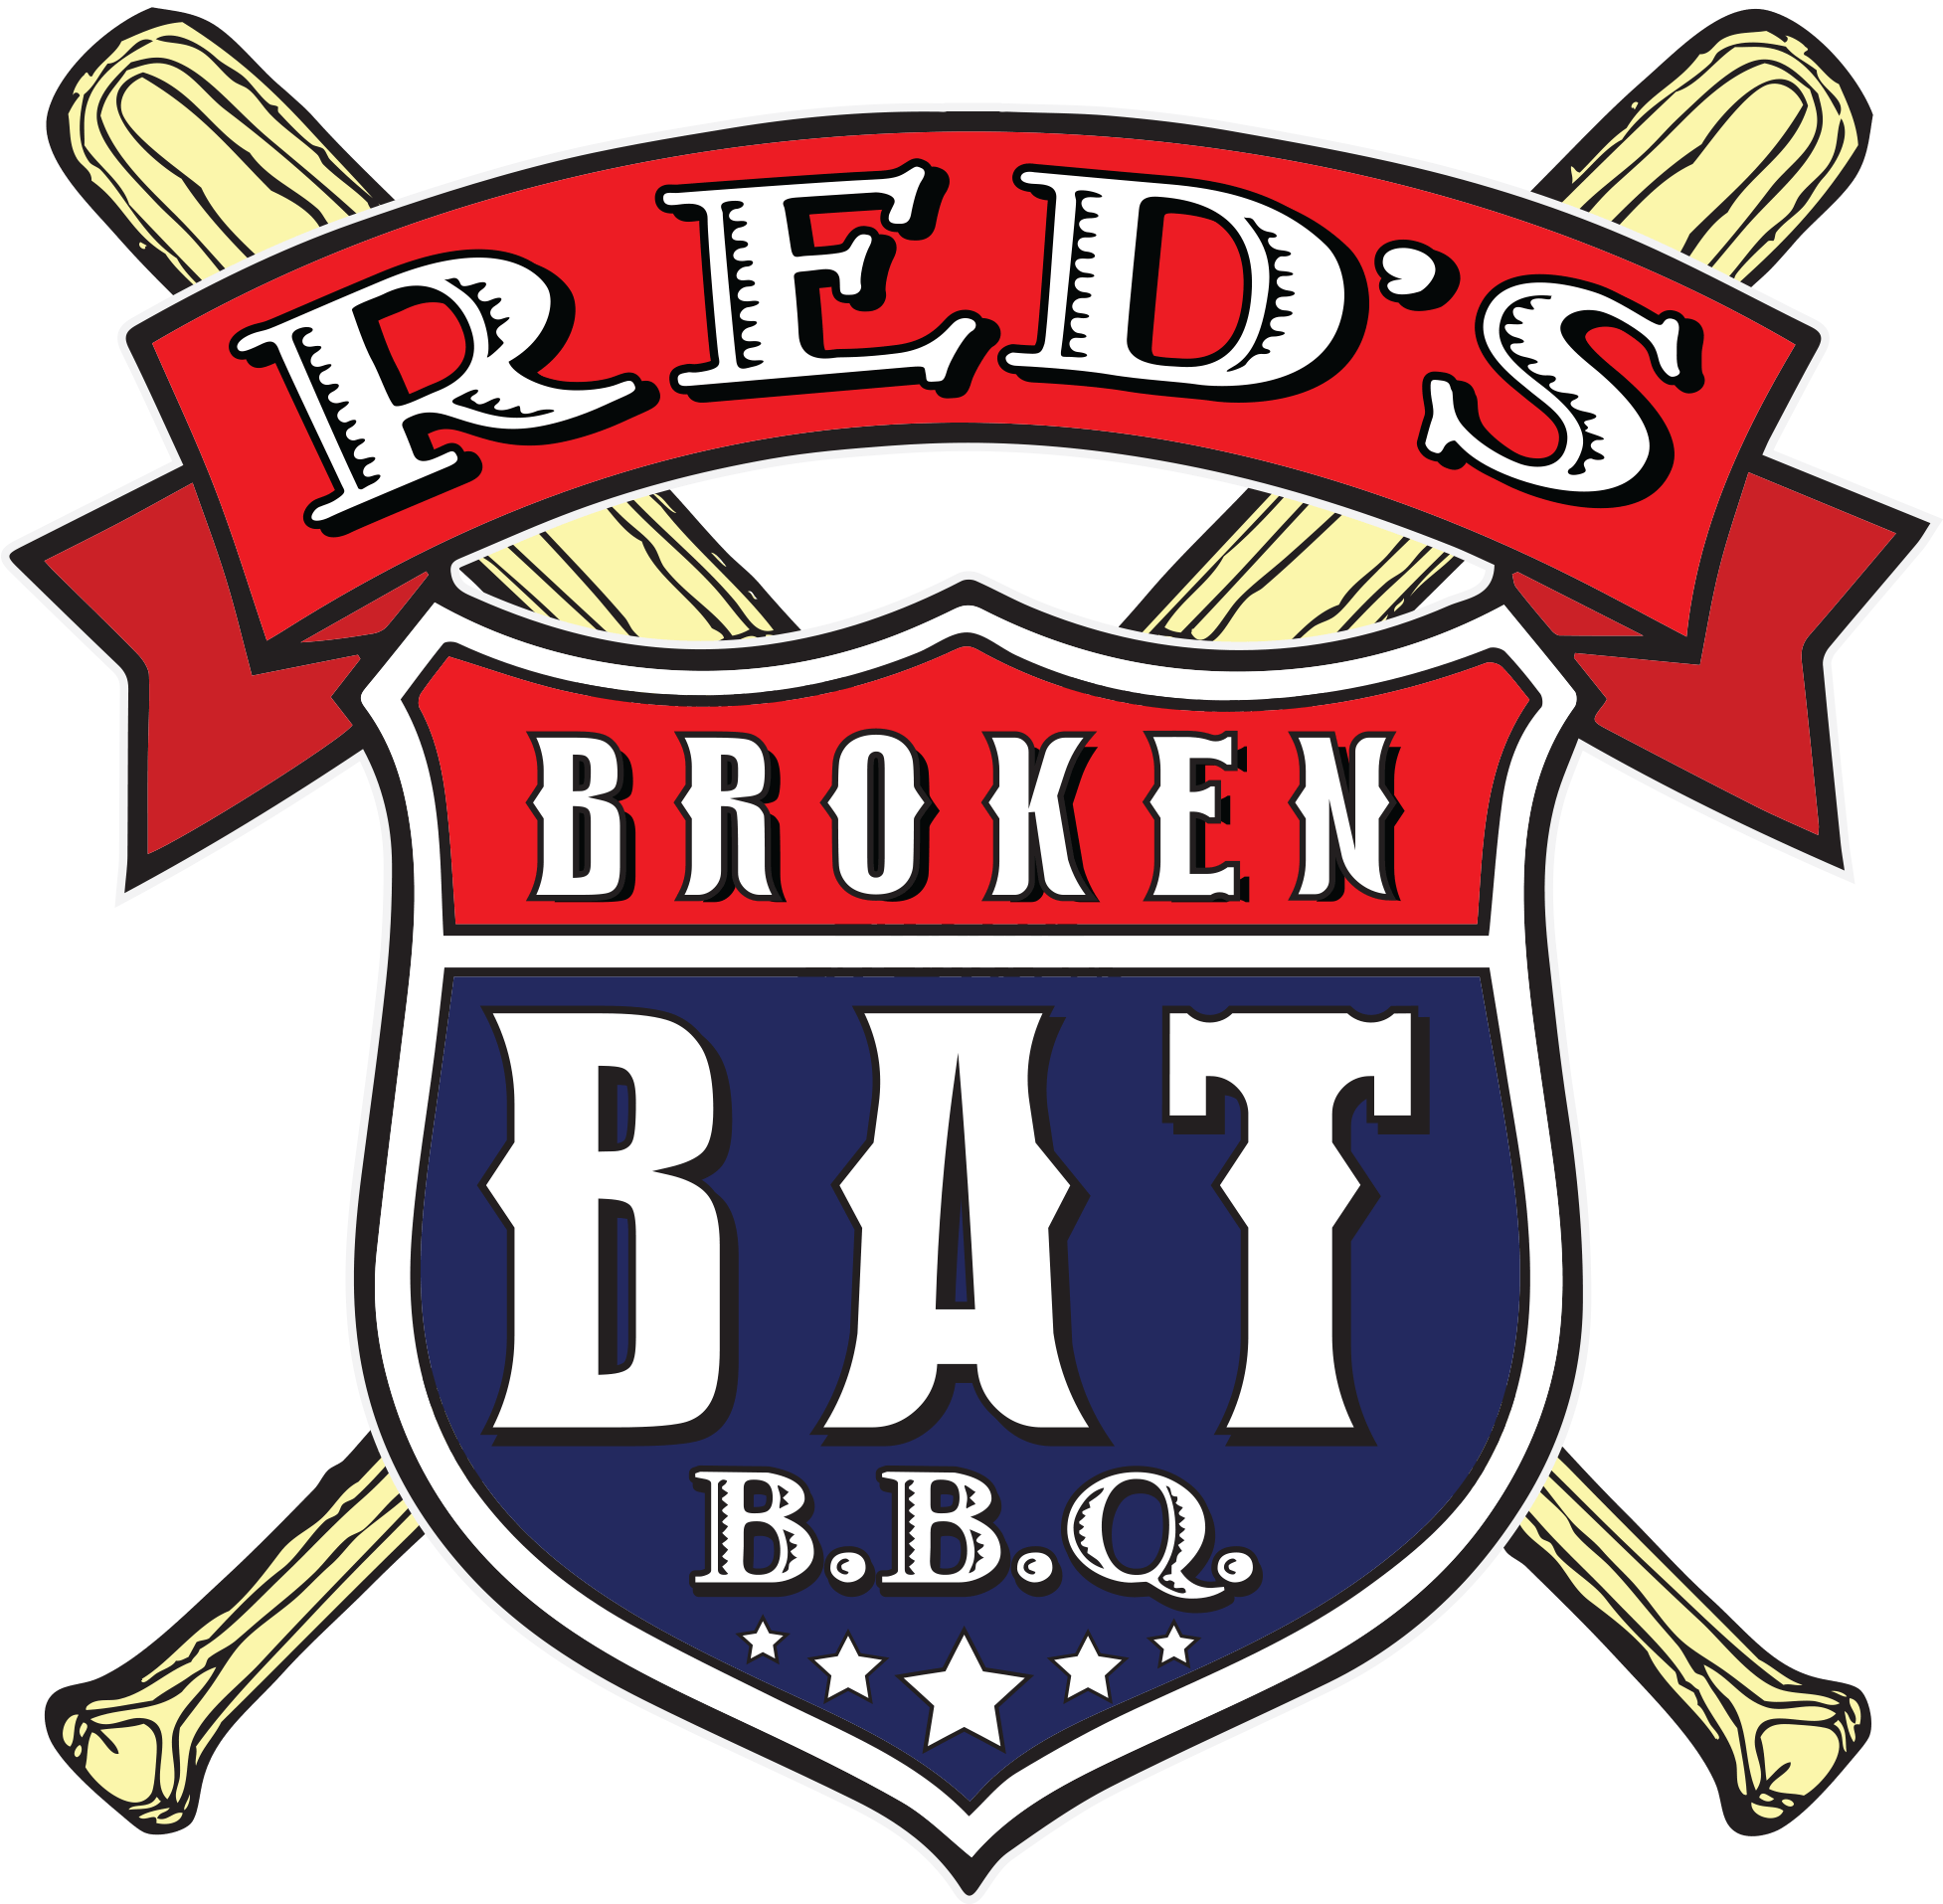 Red Bat Logo - Red's Broken Bat B.B.Q. – World Famous Fare